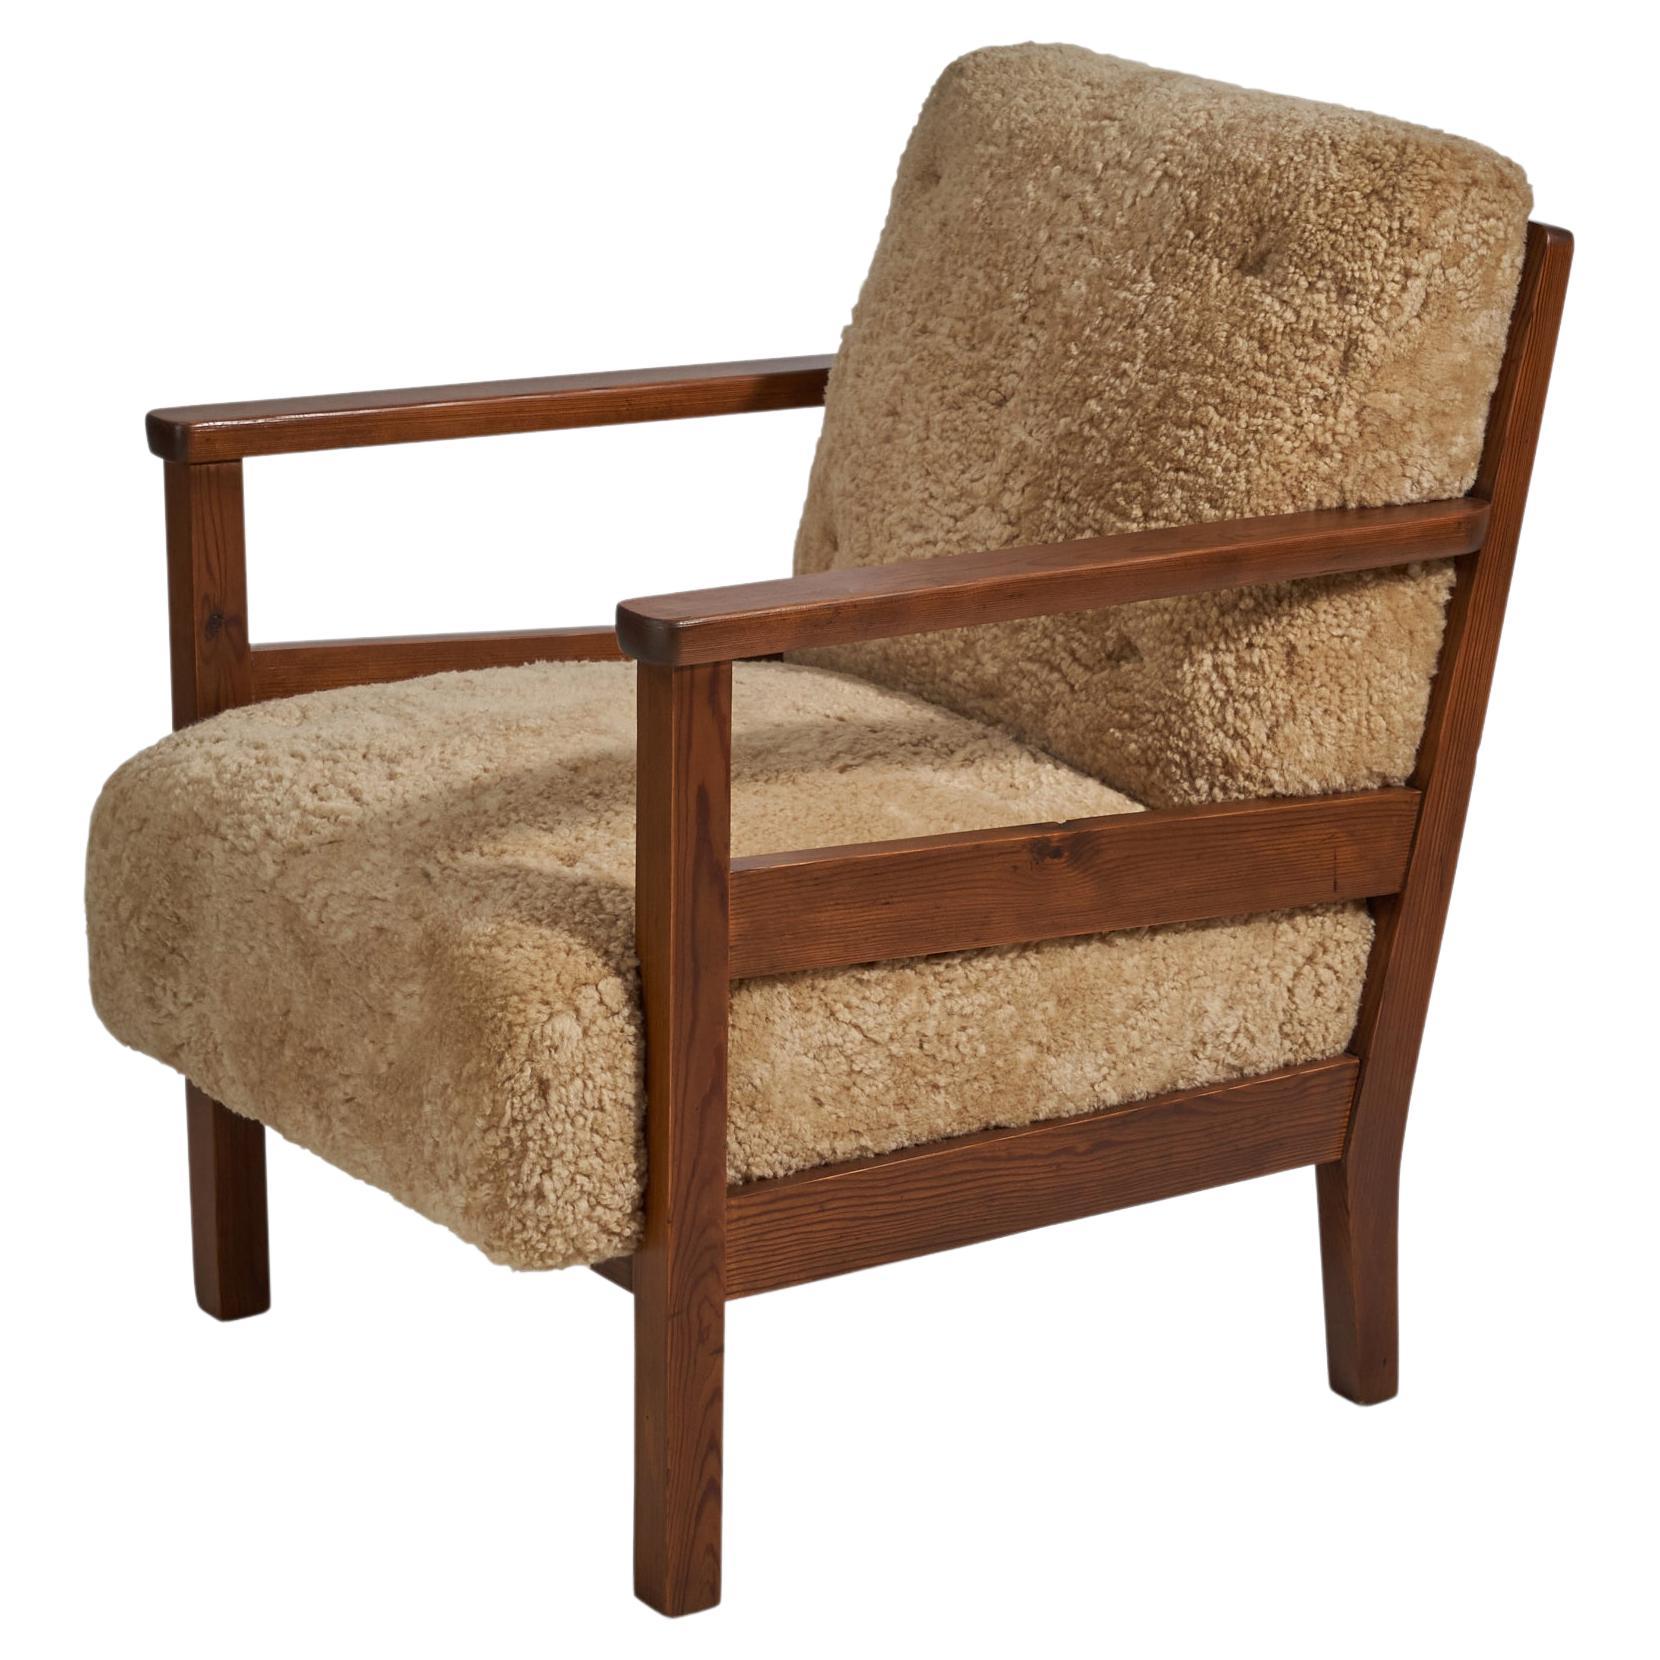 Axel Einar Hjorth, "Wärmdö" Lounge Chair, Pine, Shearling, NK, Sweden, 1942 For Sale